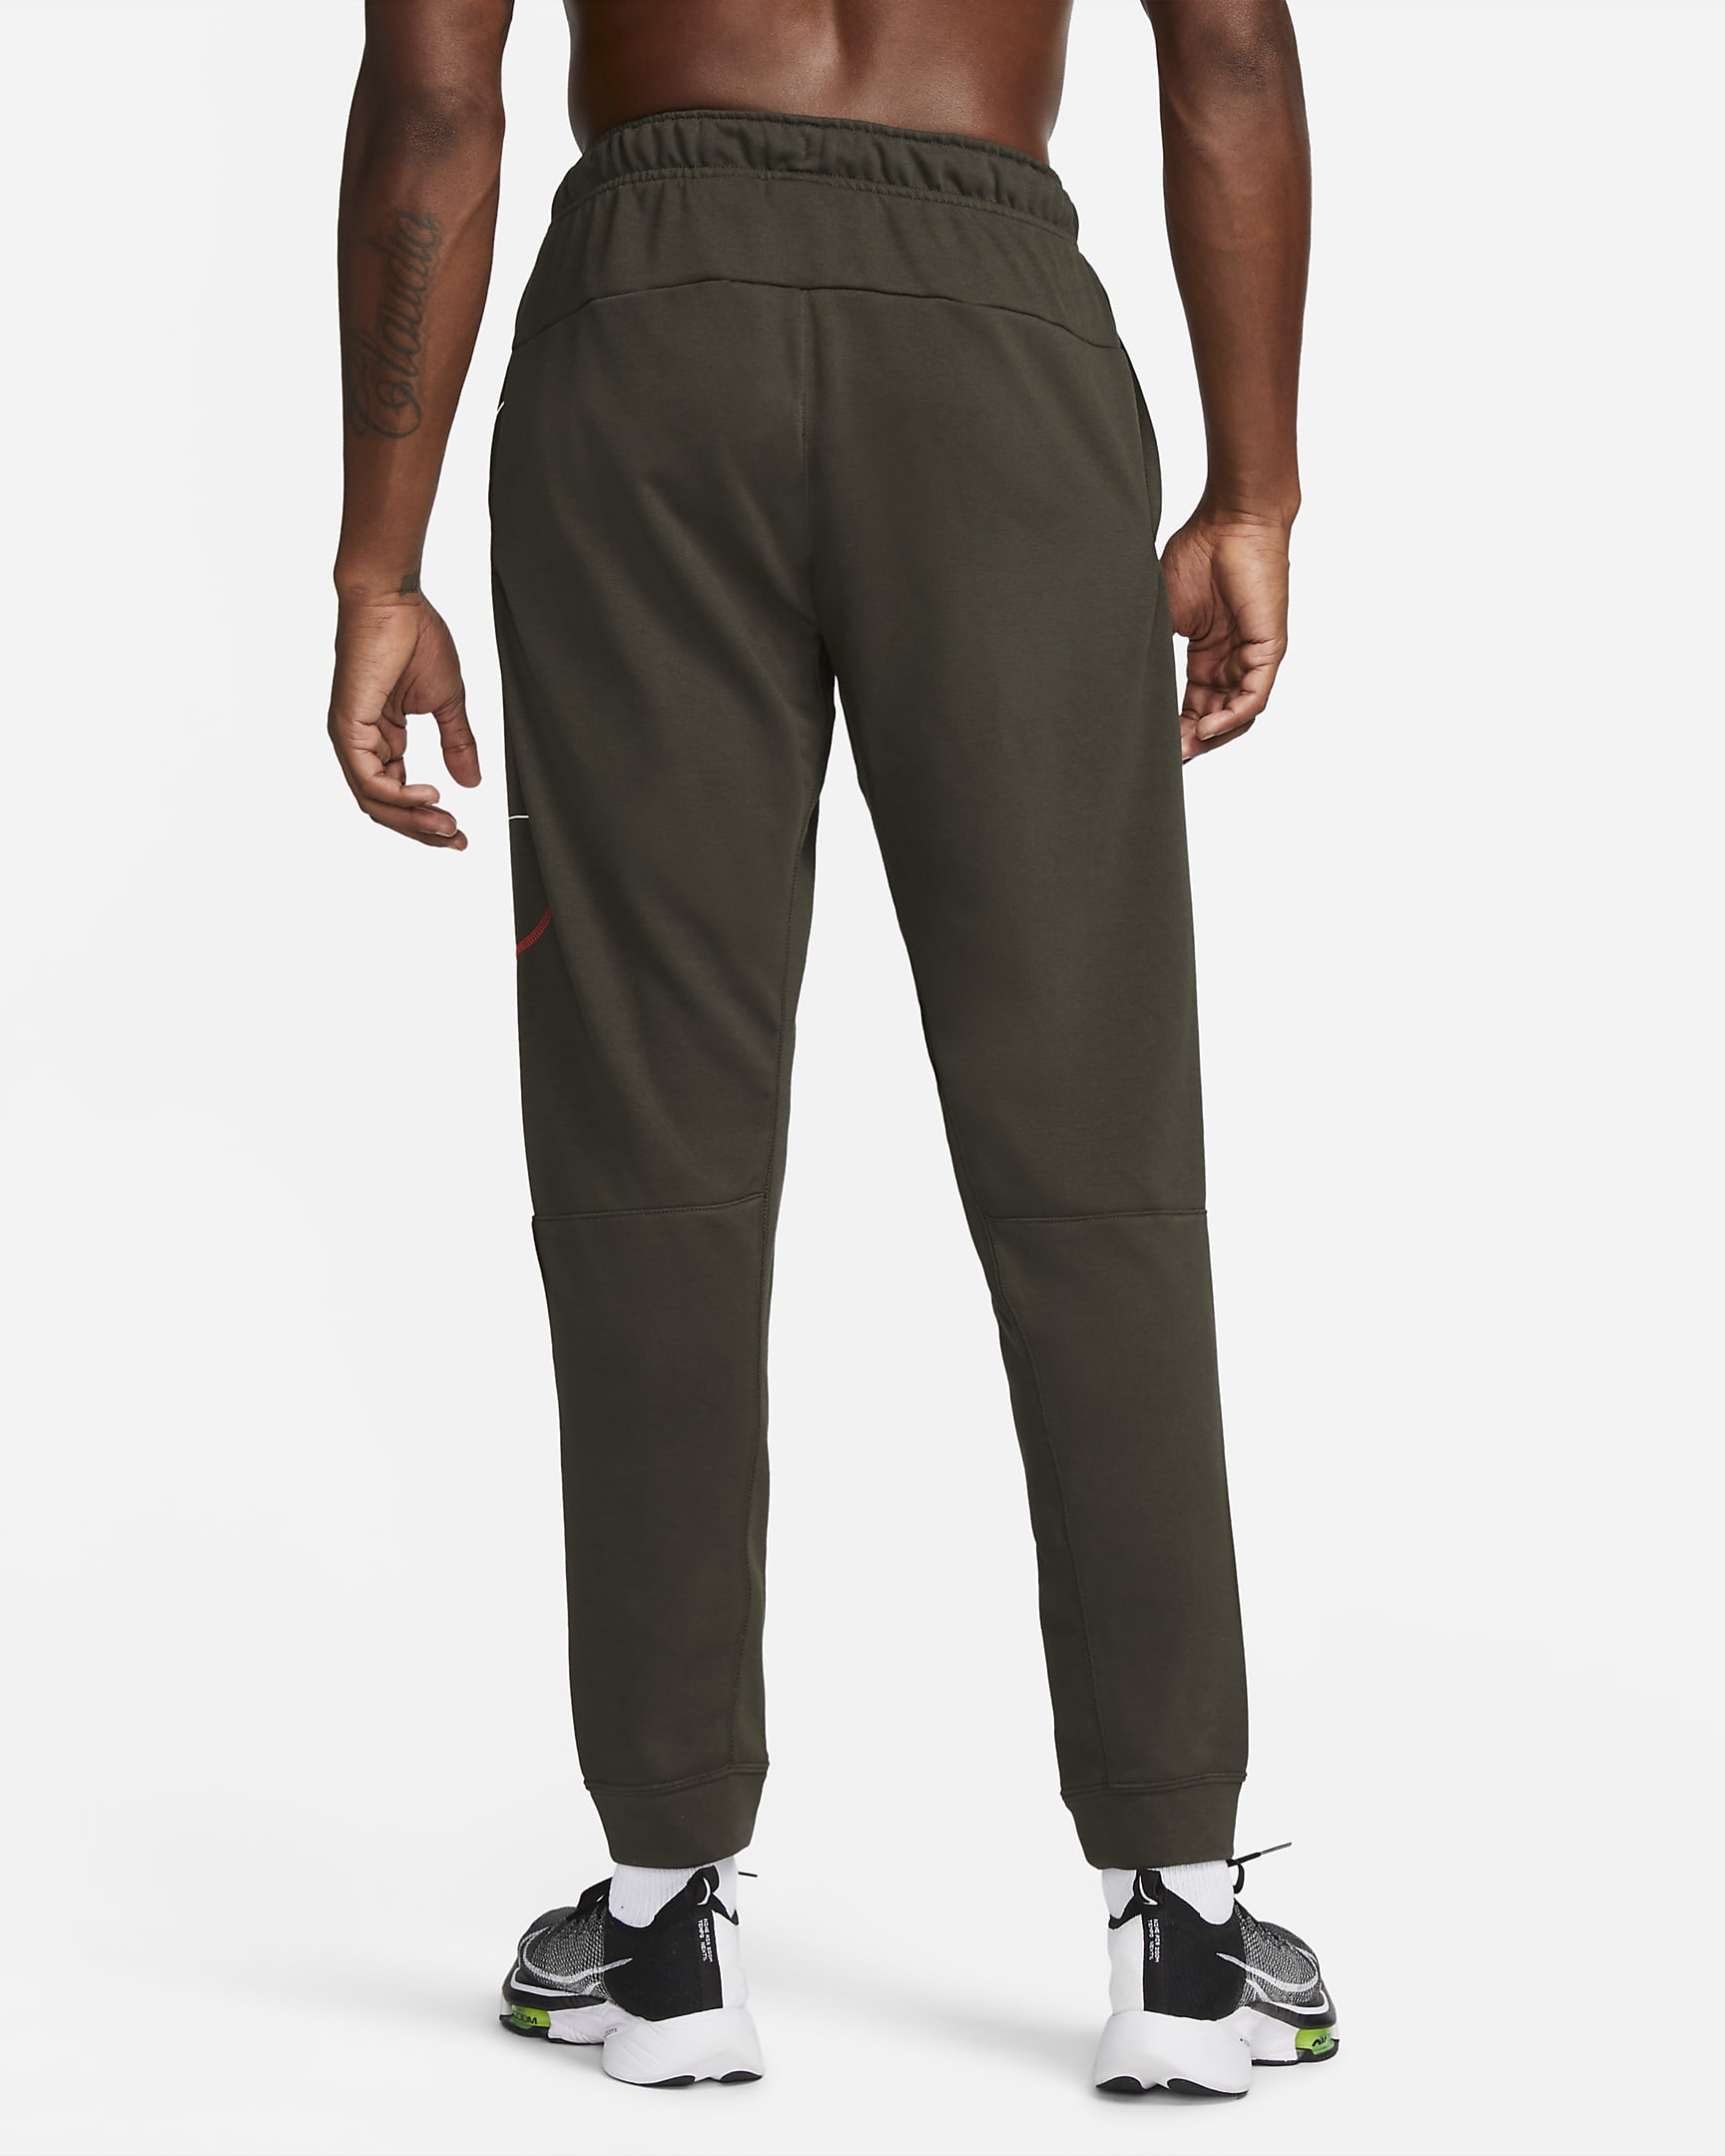 Pants de running entallados de tejido Fleece para hombre Nike Dri-FIT ...